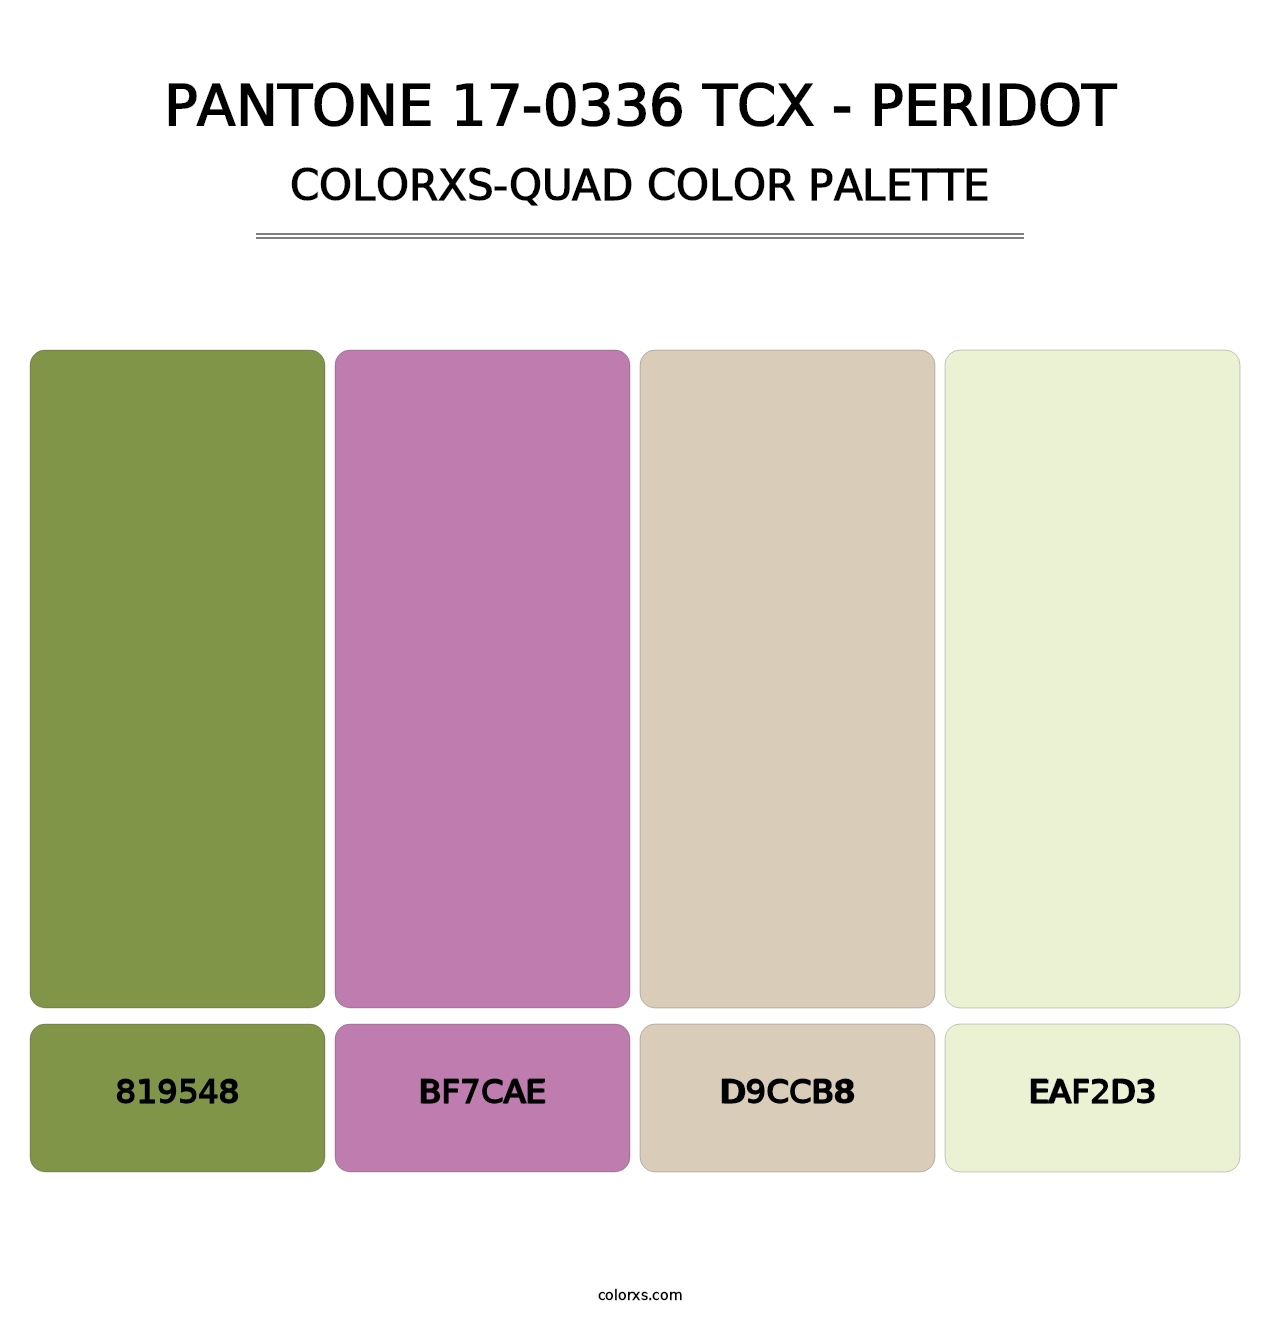 PANTONE 17-0336 TCX - Peridot - Colorxs Quad Palette